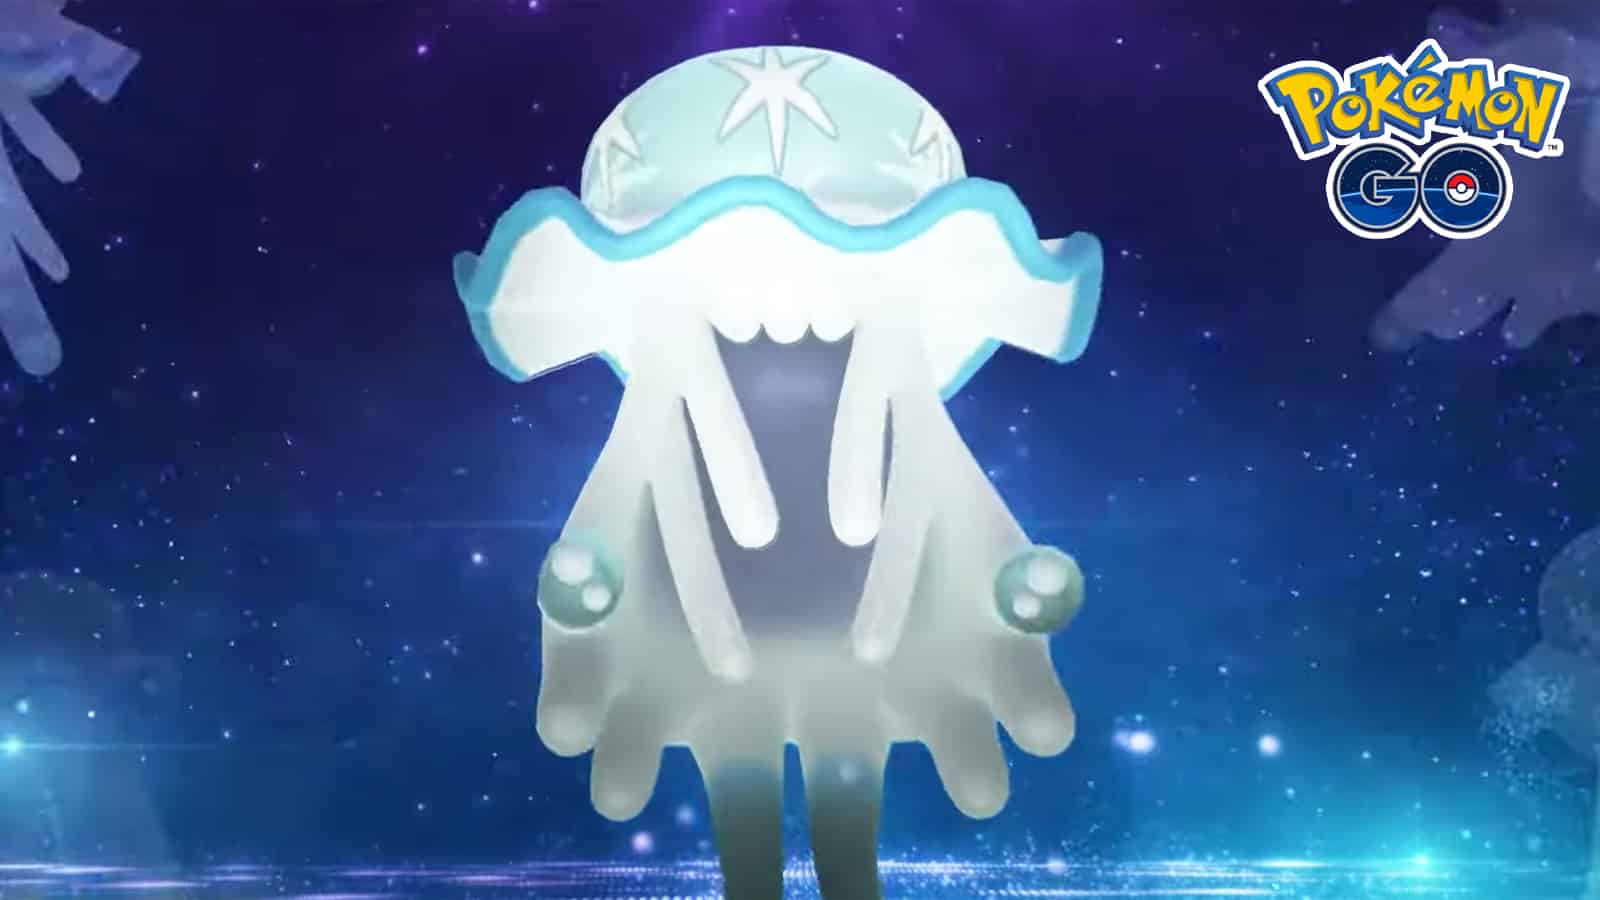 Ultra Beast Nihilego appearing in Pokemon Go